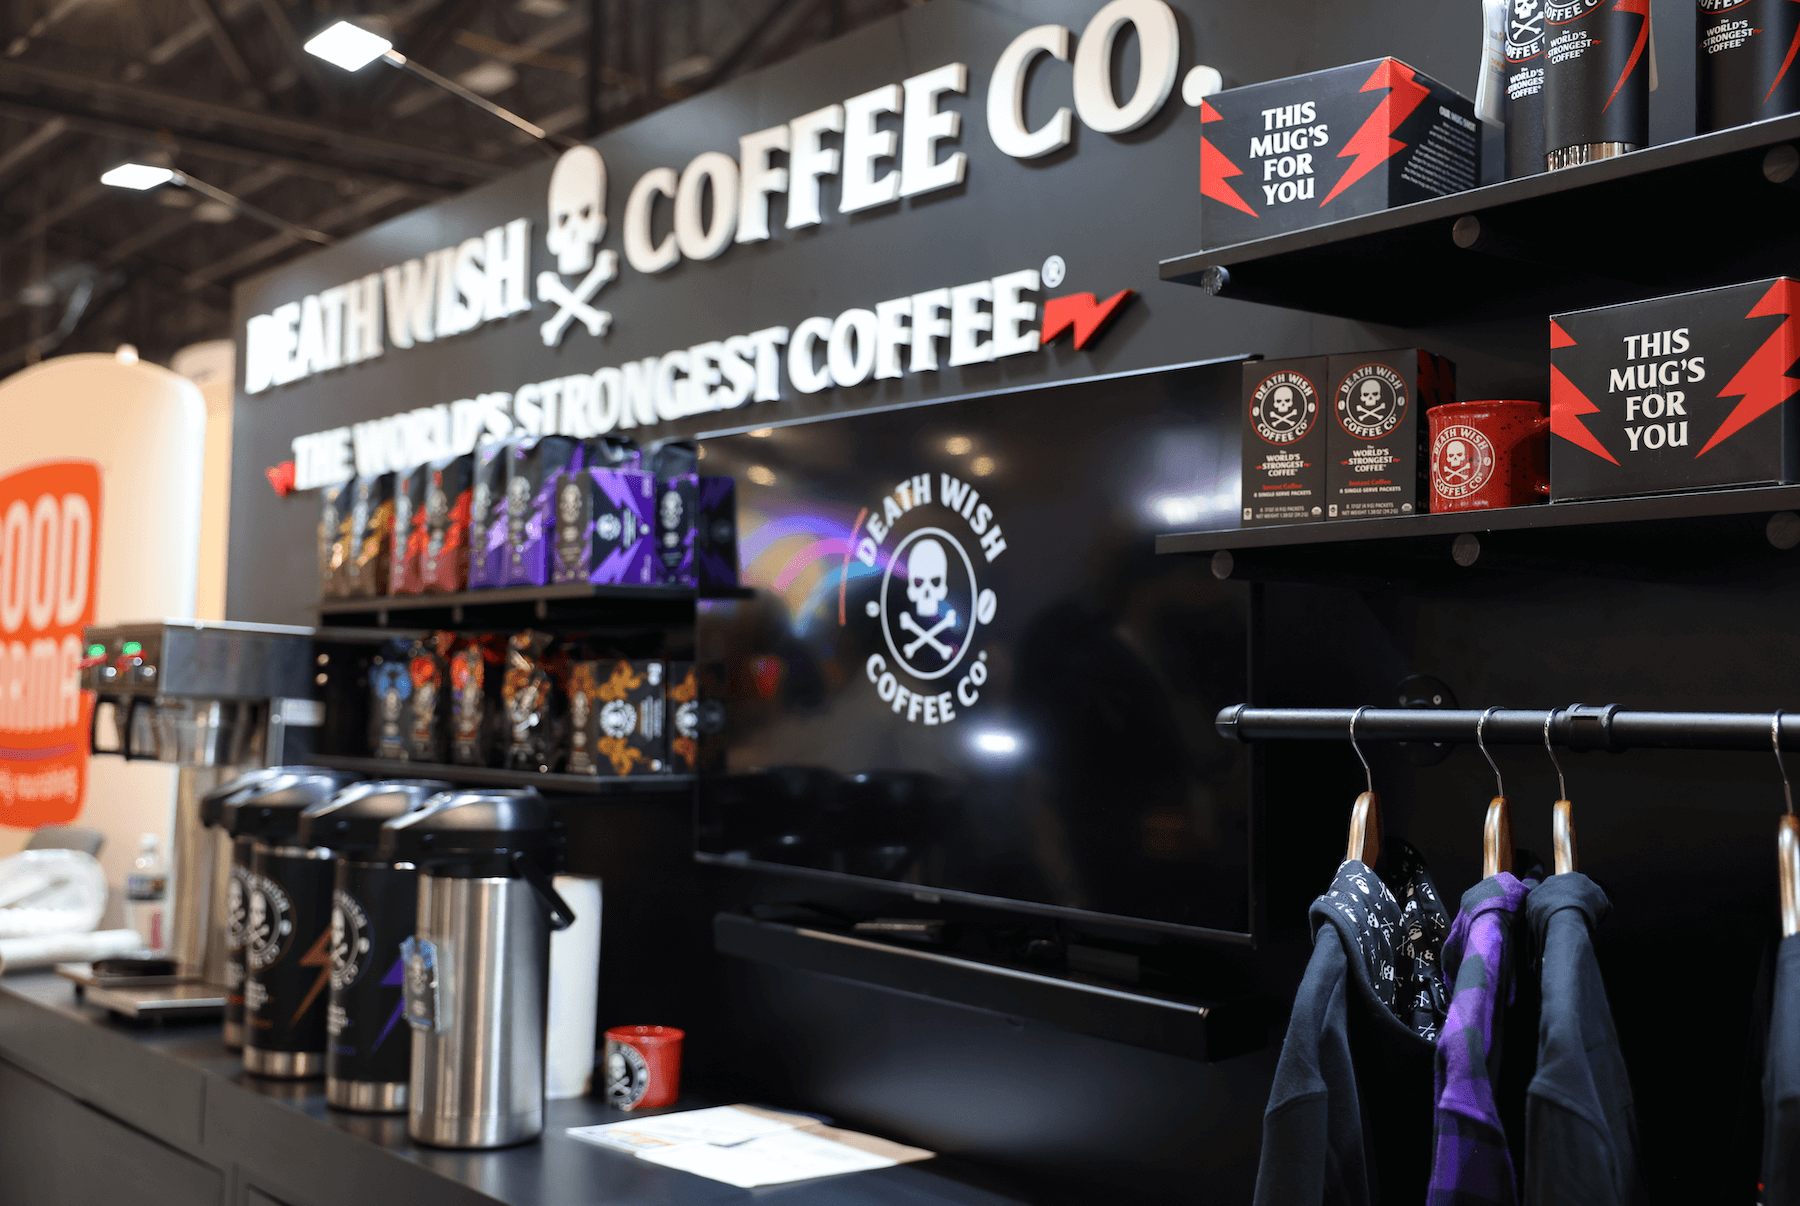 Deathwish Coffee Company